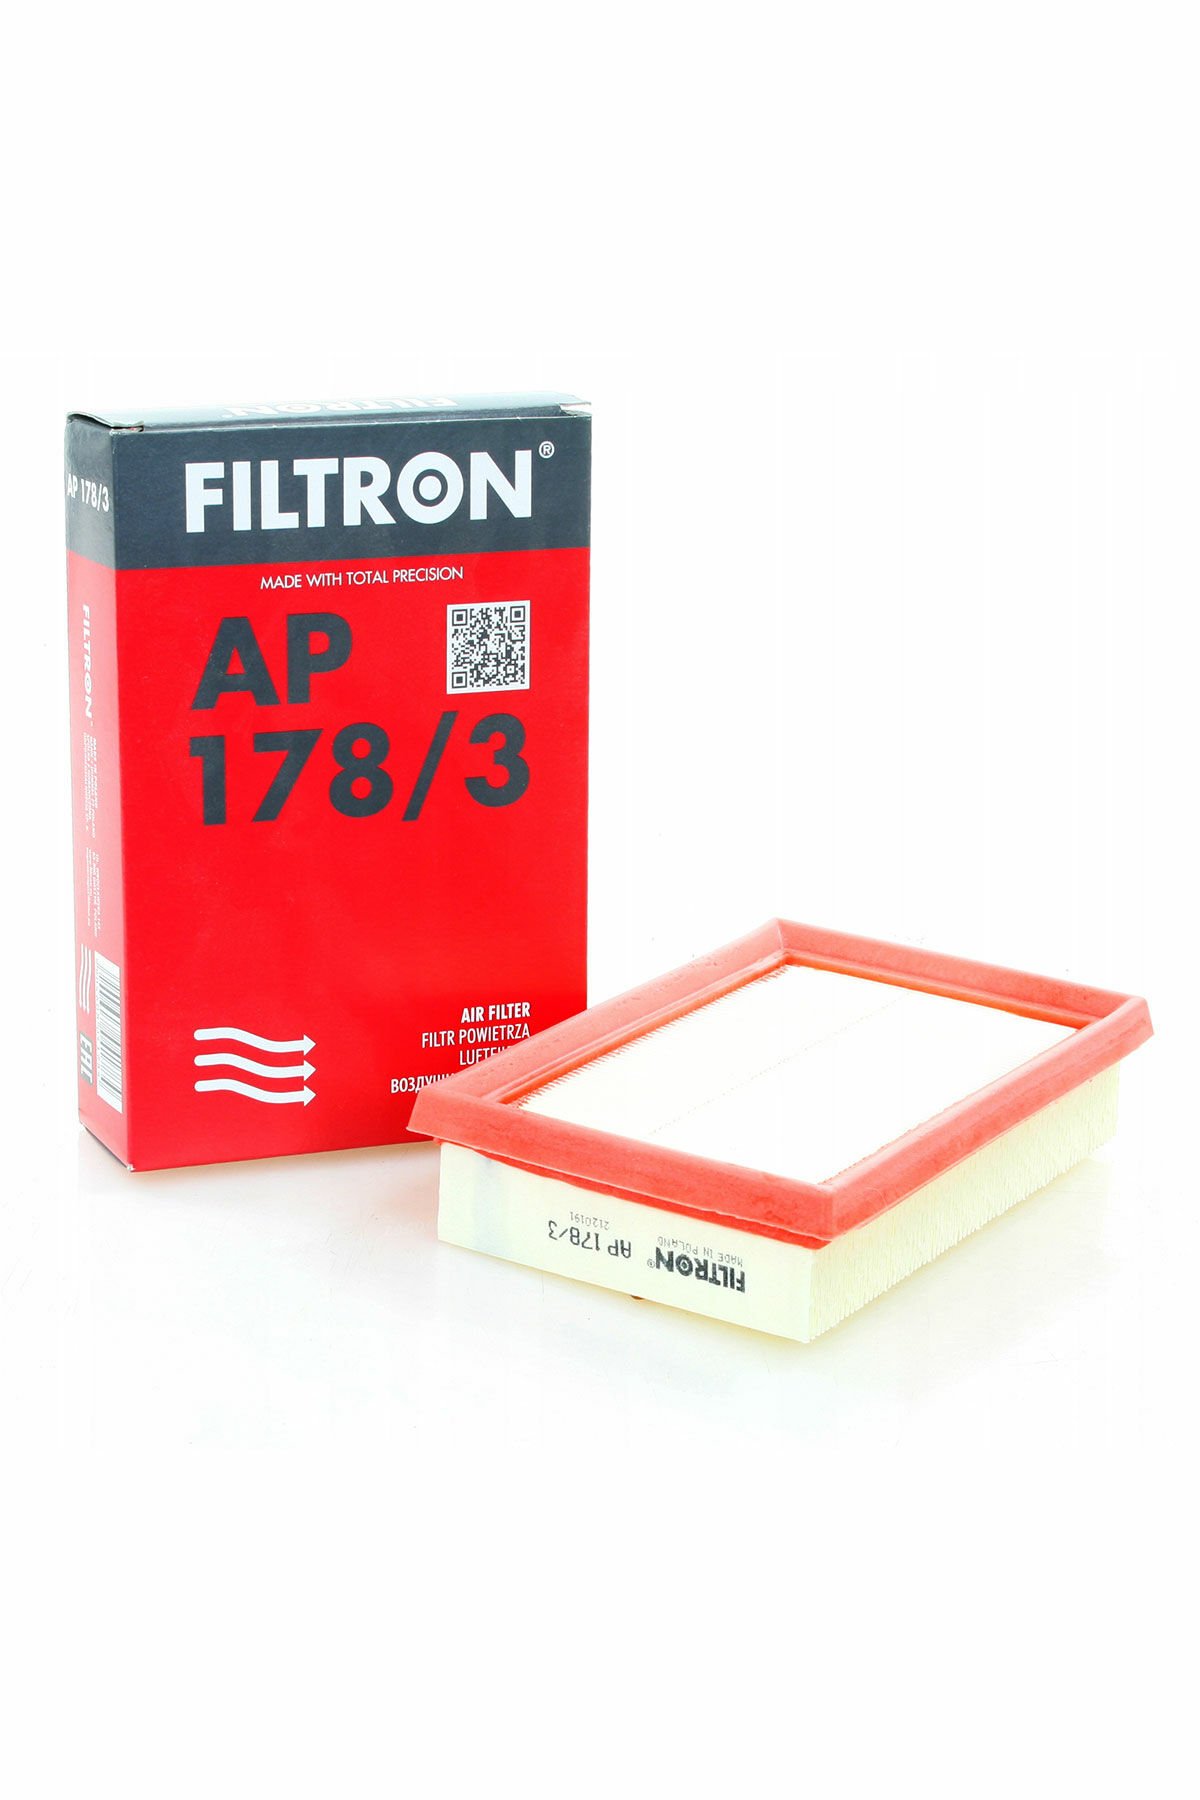 Citroen C1 1.0 VTI Benzinli Hava Filtresi 2014-2016 Filtron